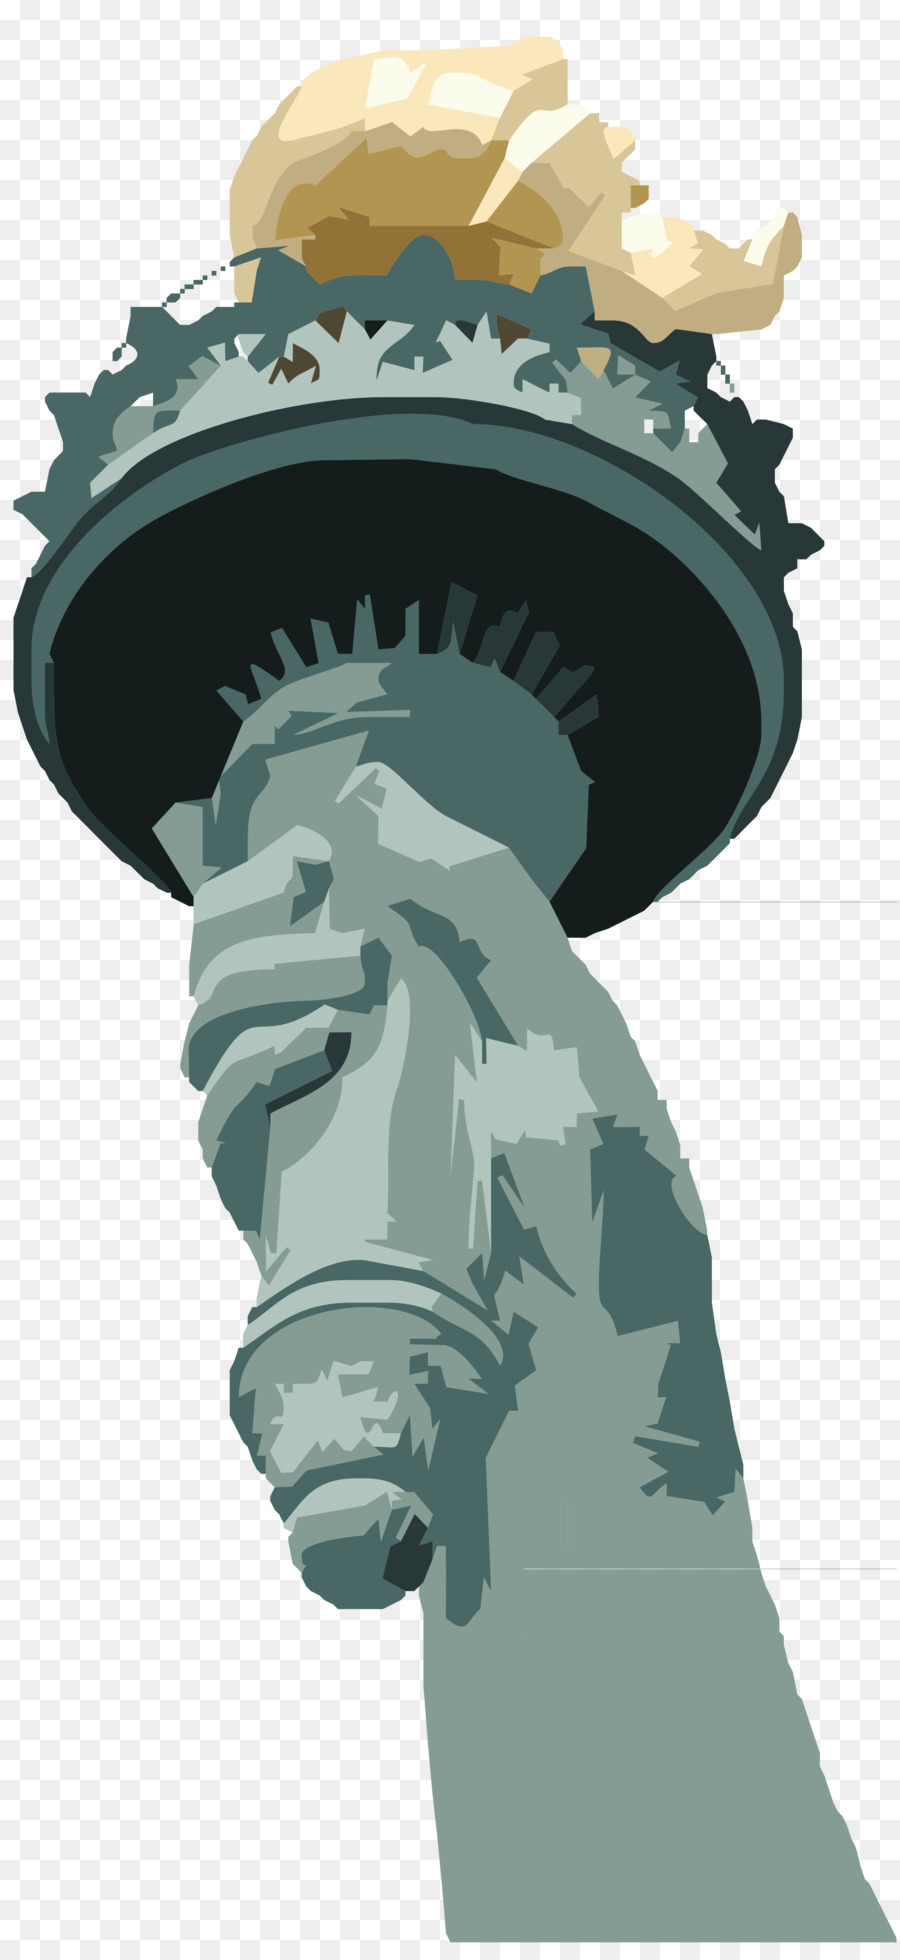 Statue Of Liberty img